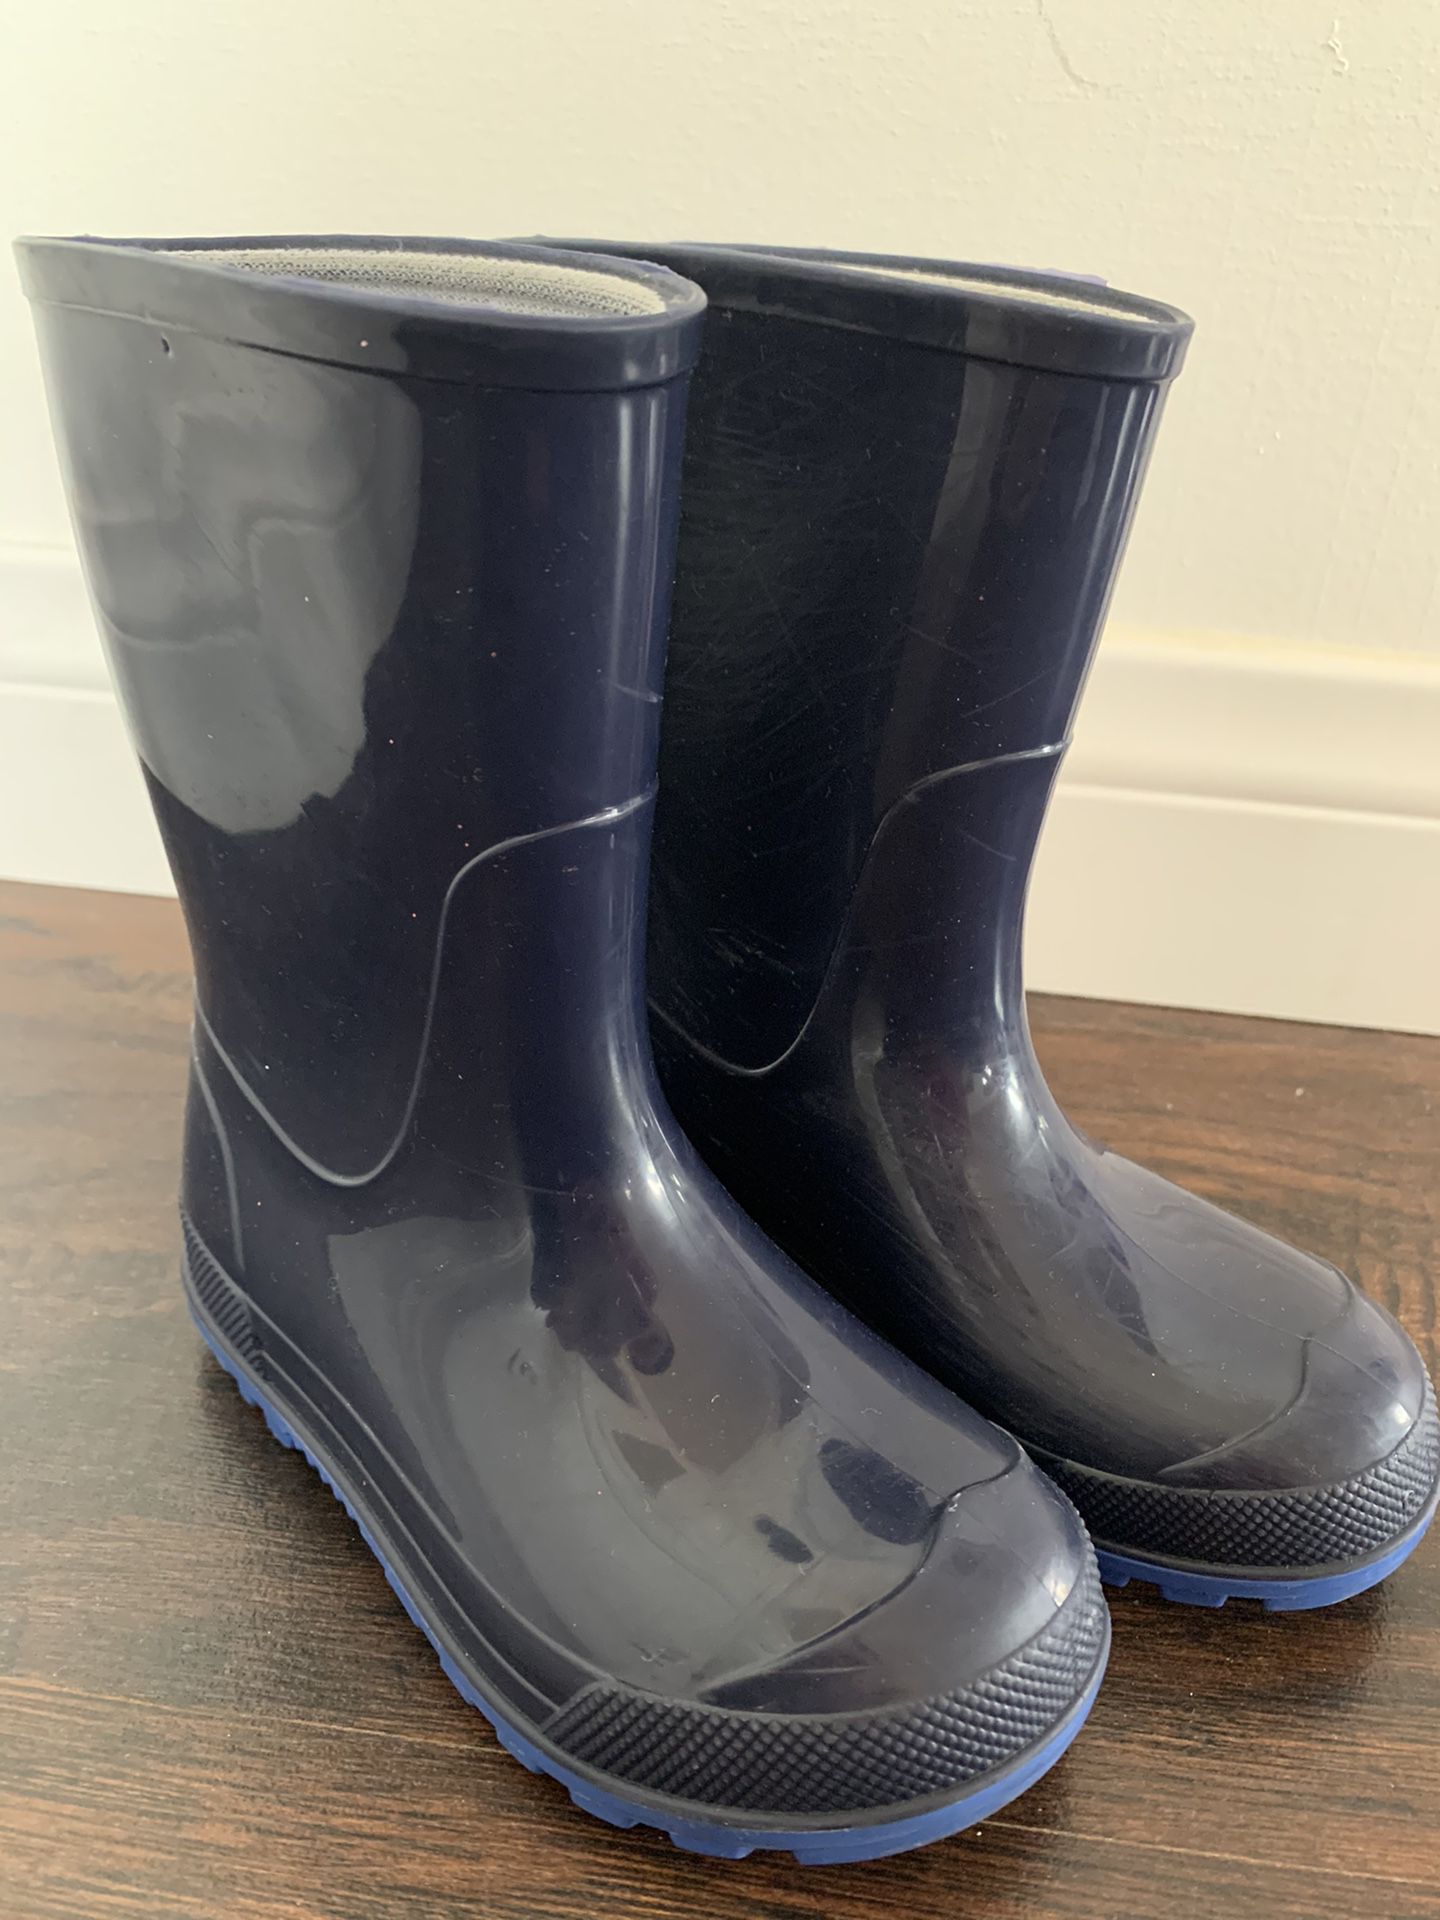 Rain boots/boots